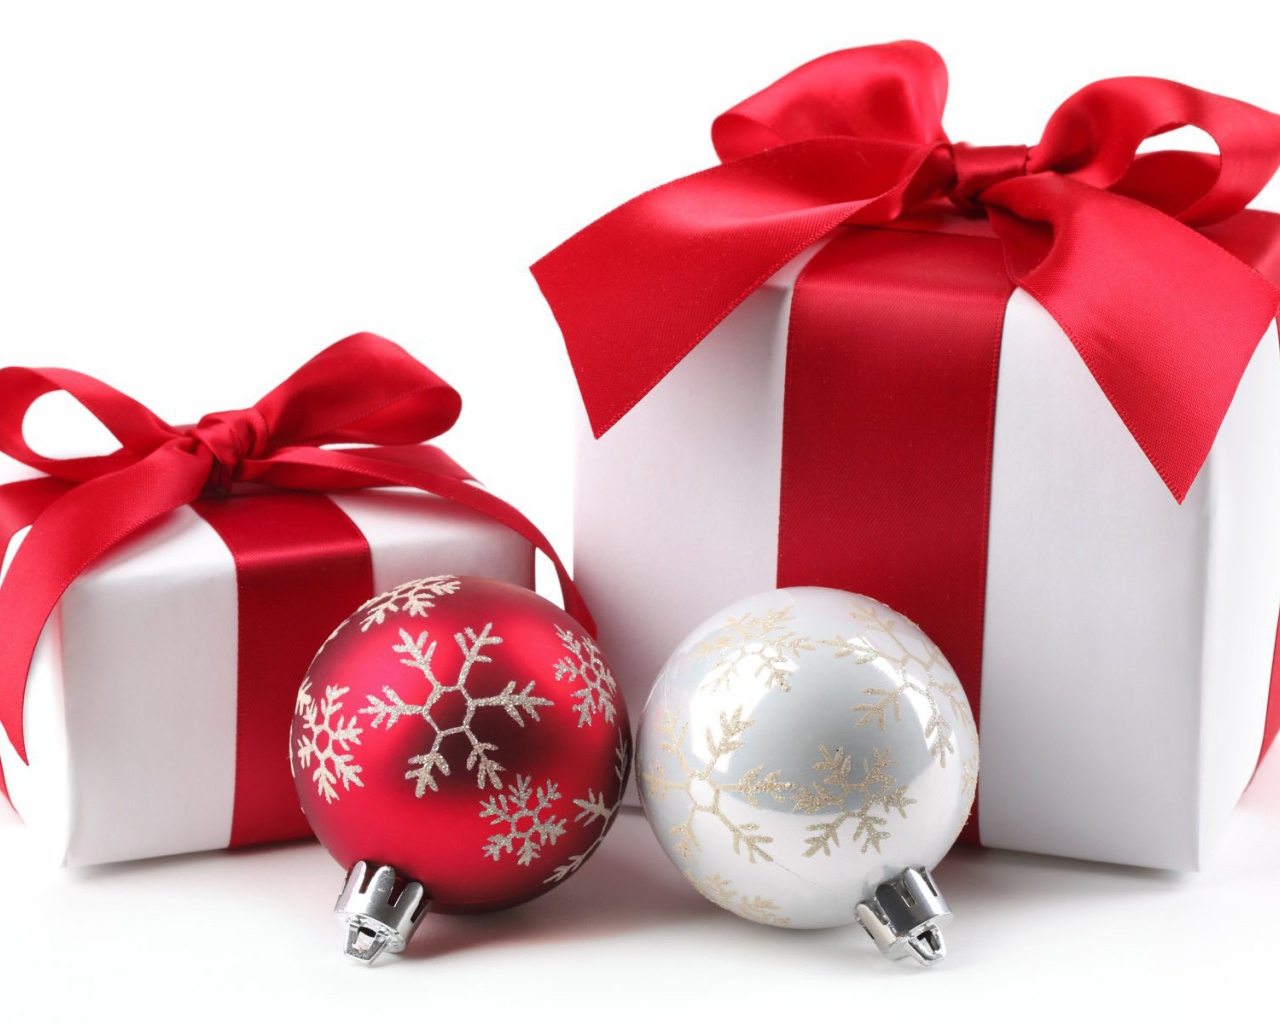 Gift boxes and Christmas decorations on Christmas